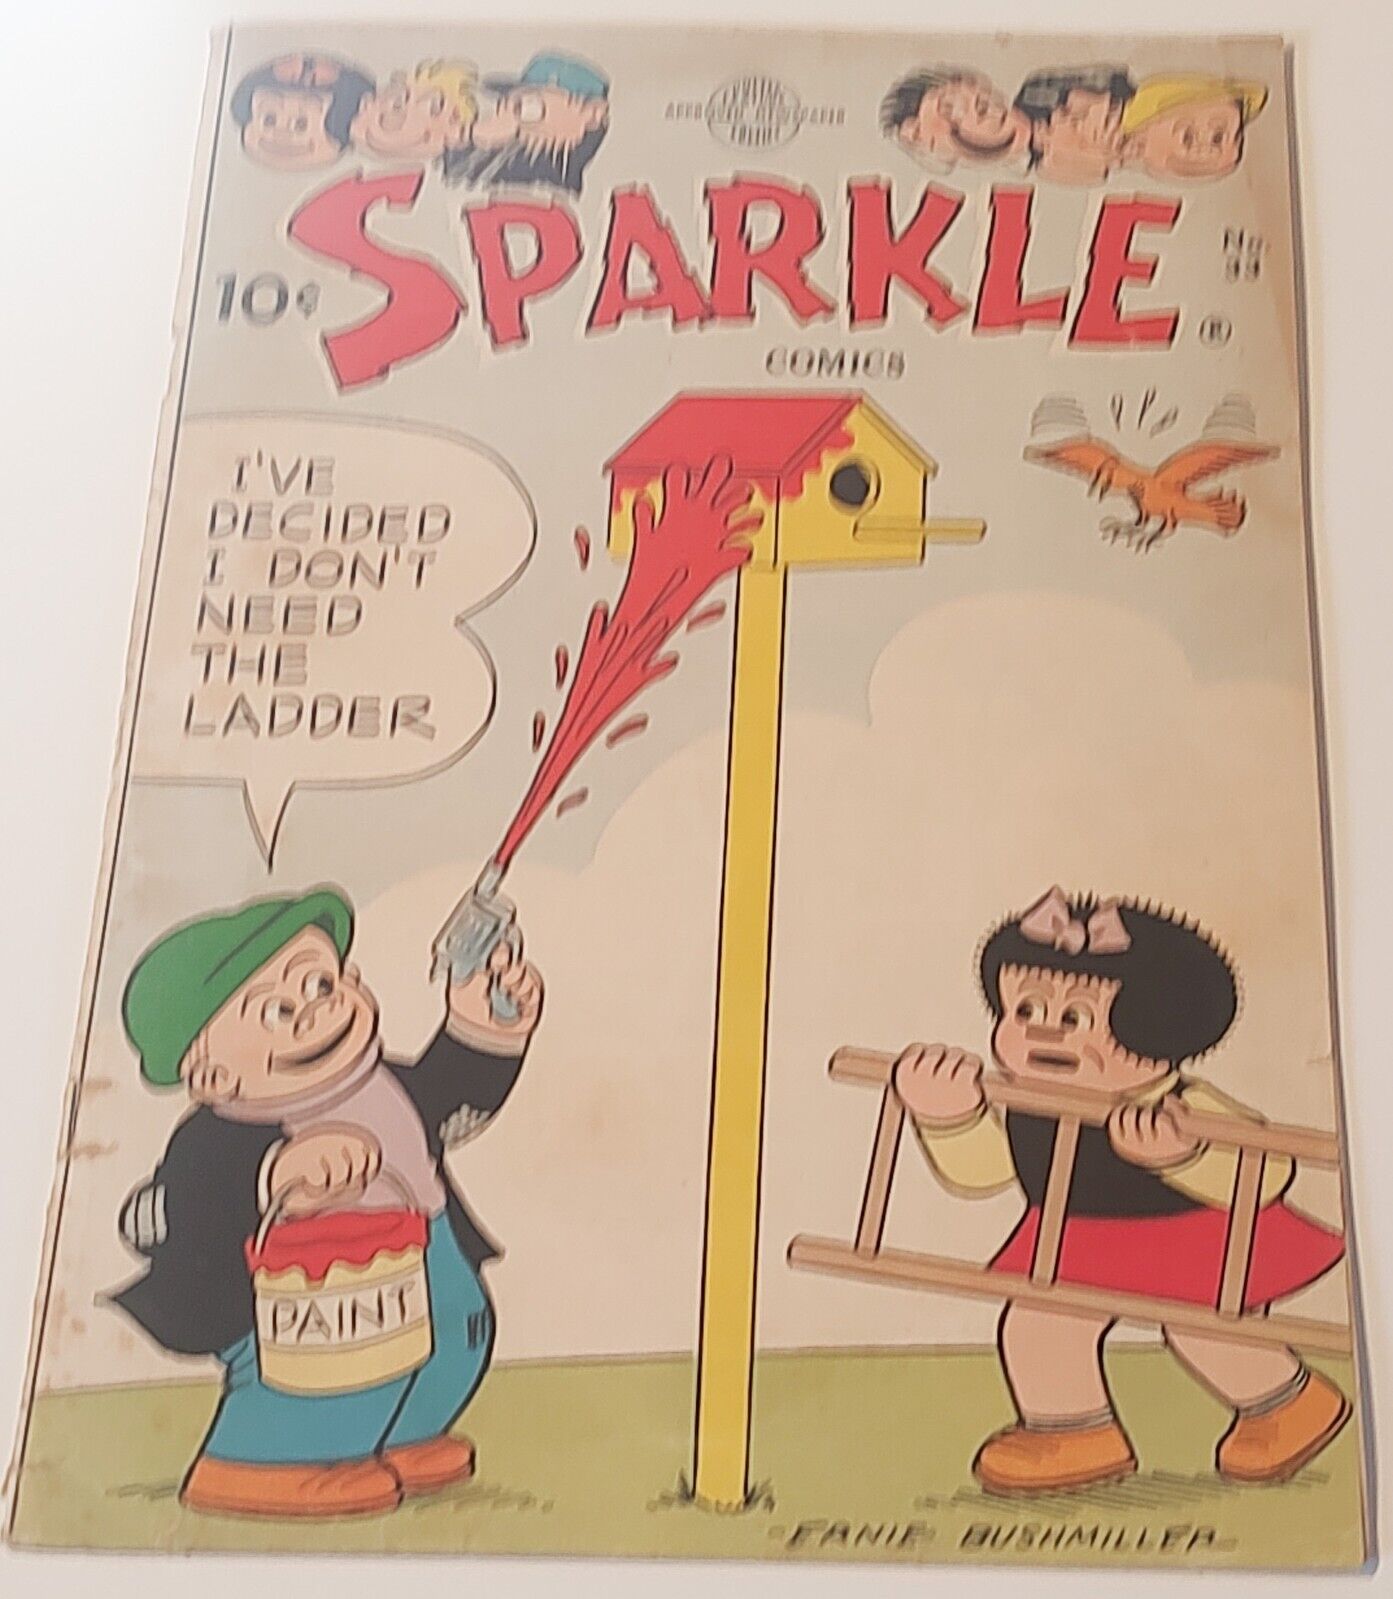 Pre-CodeUnited Features Sparkle Comics #33, Nancy/Sluggo, Early Peanuts